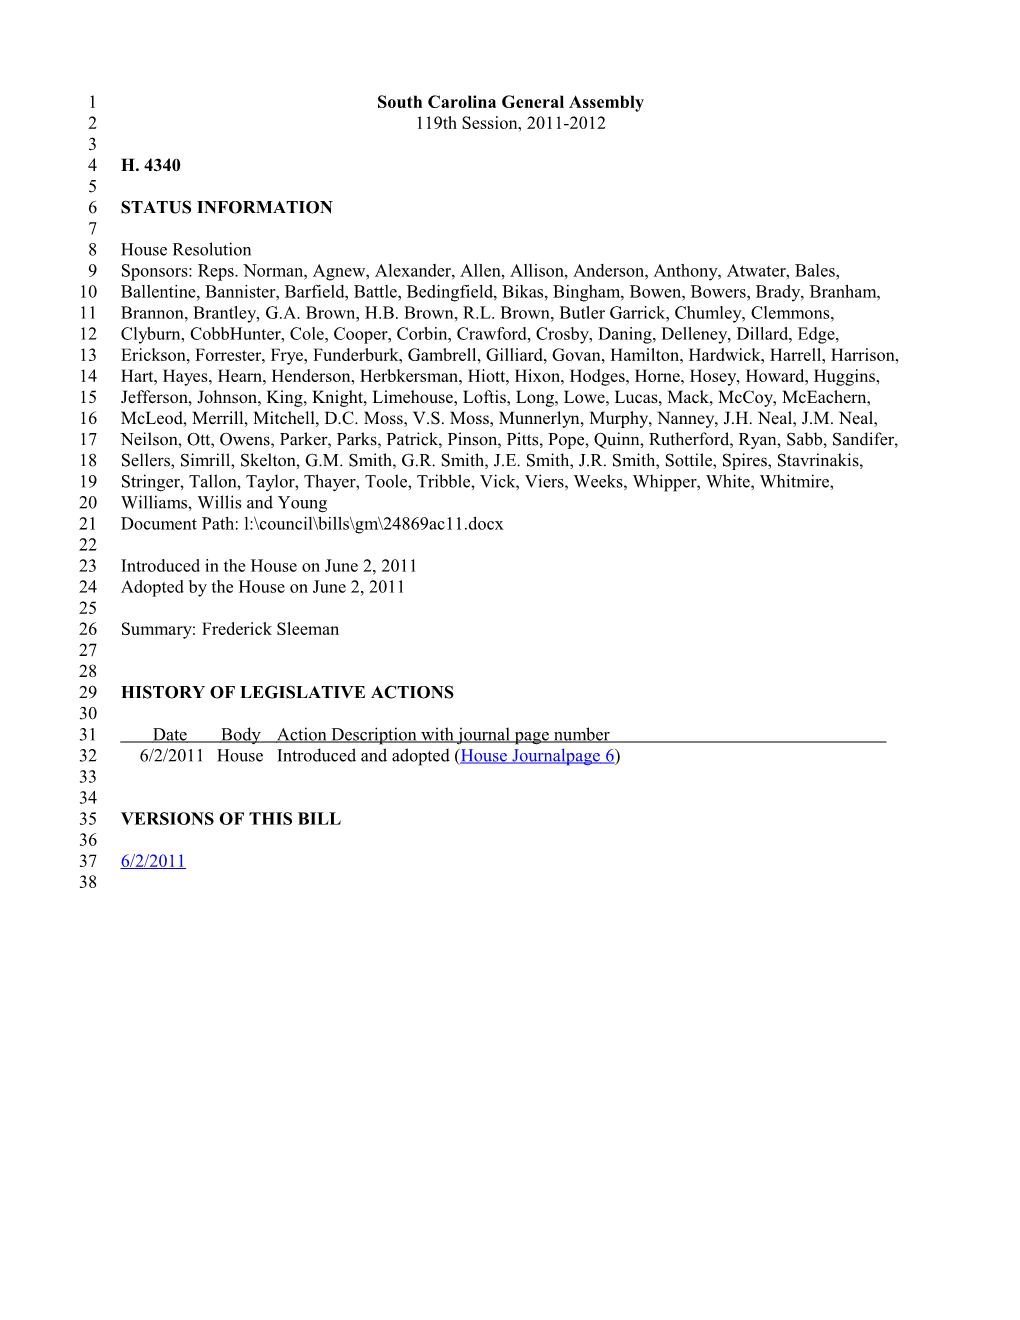 2011-2012 Bill 4340: Frederick Sleeman - South Carolina Legislature Online